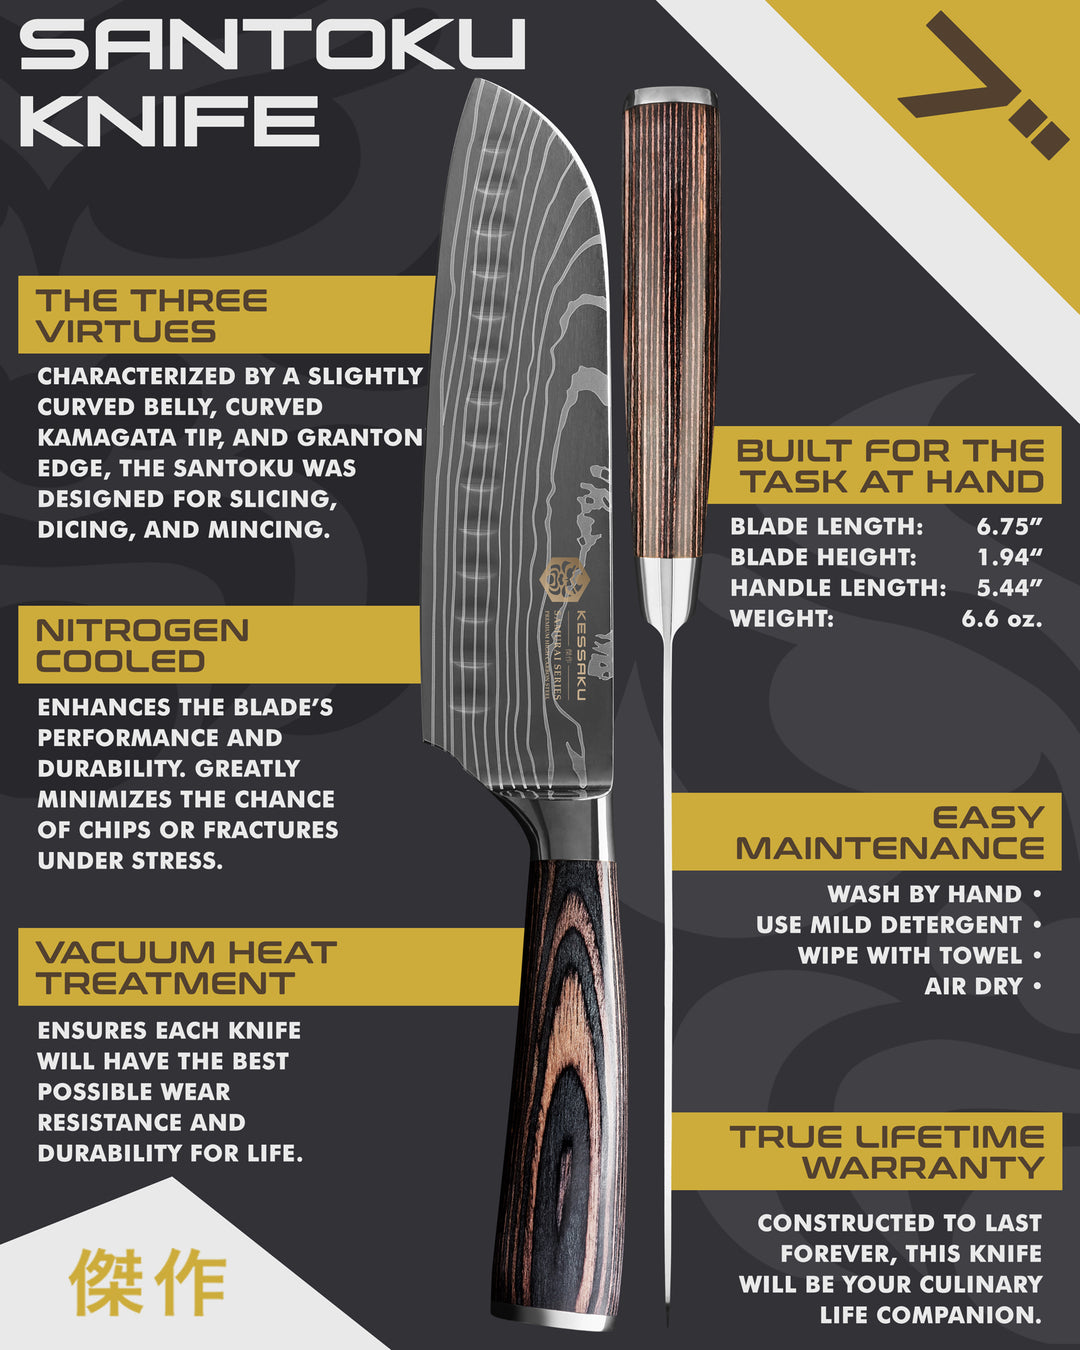 Kessaku Samurai Series Santoku Knife uses, dimensions, maintenance, warranty info, and additional blade treatments